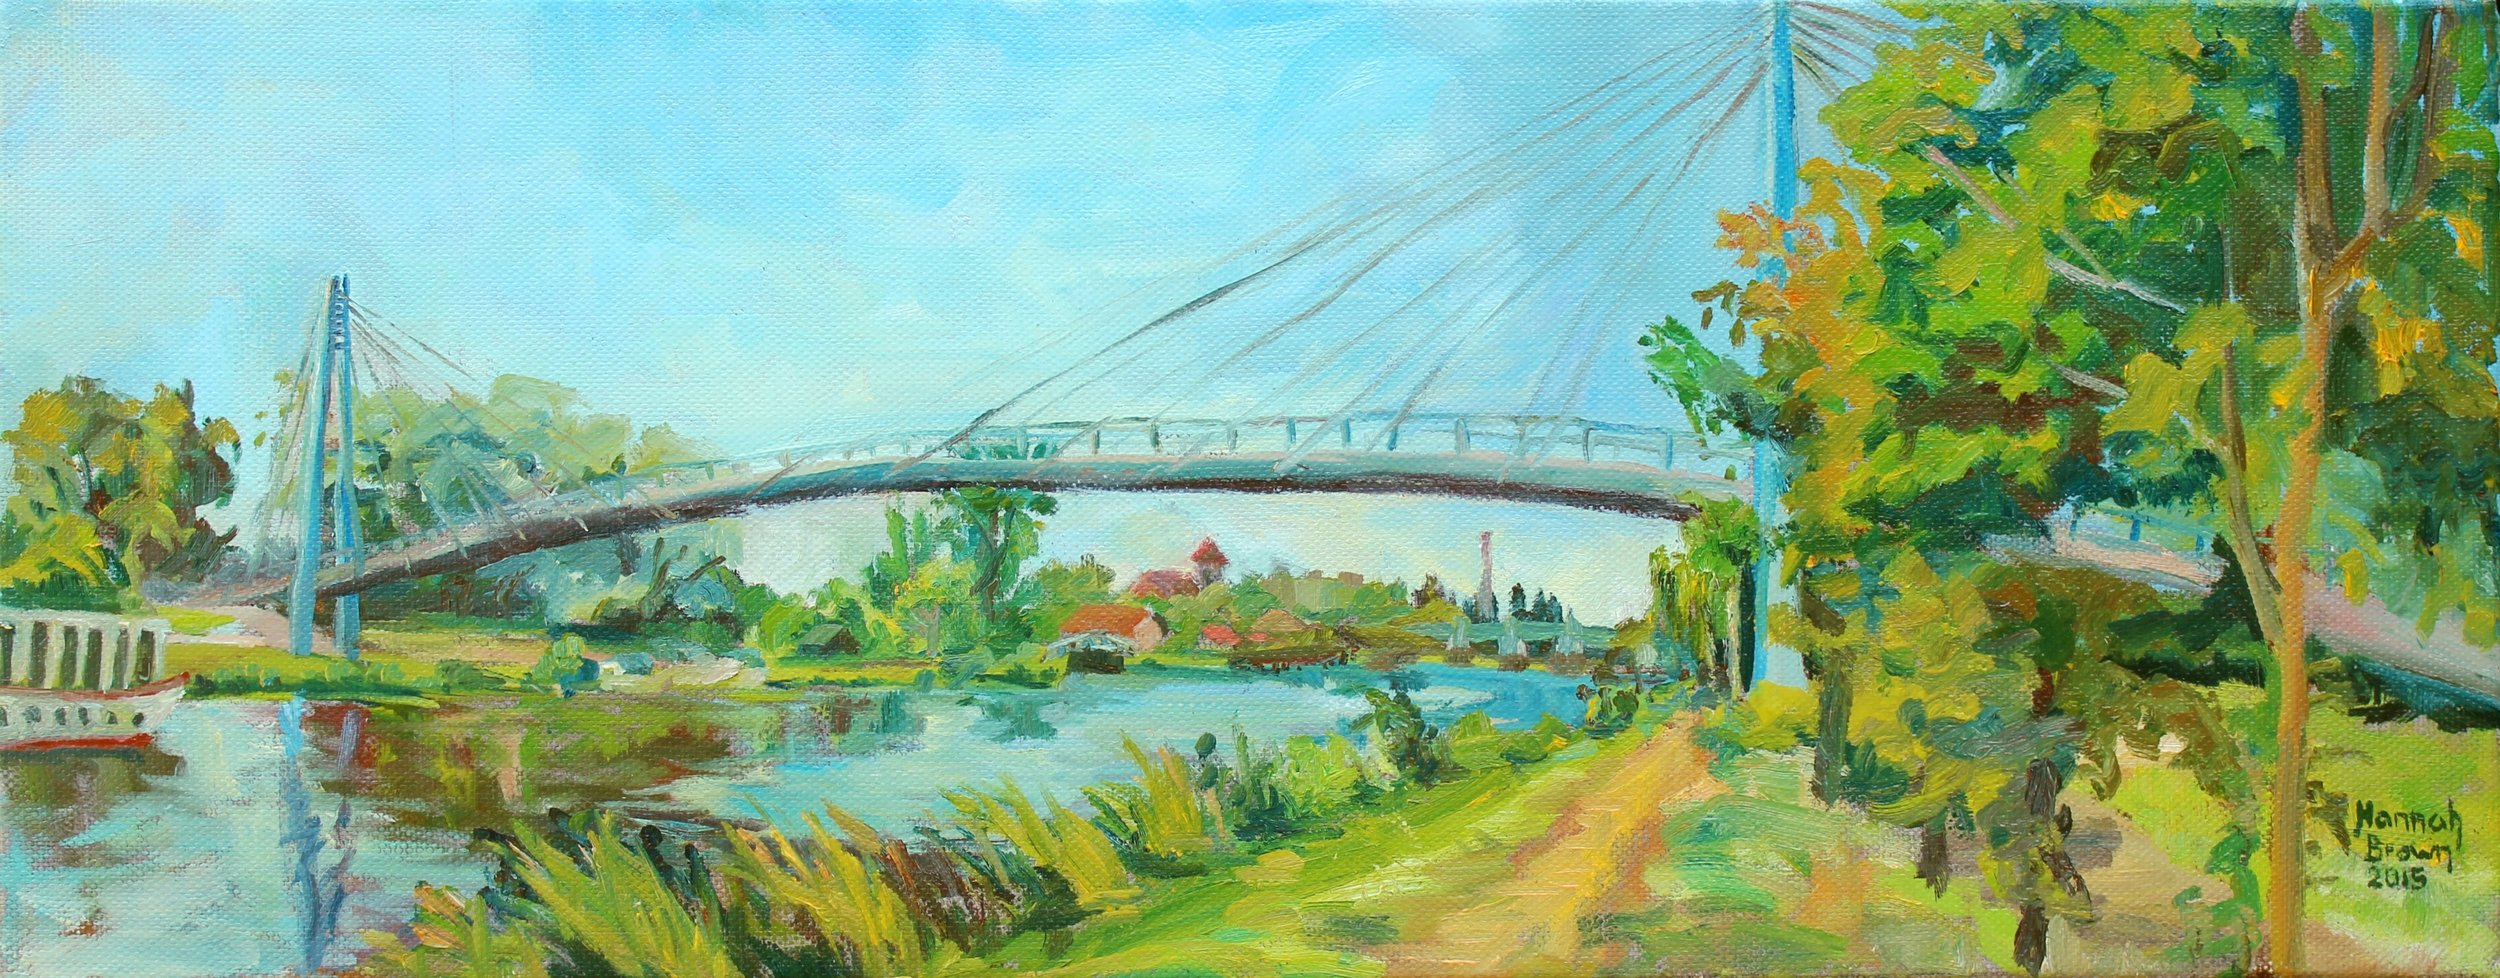 36) Čelákovická lávka - Čelákovice Bridge - 50x20.jpg